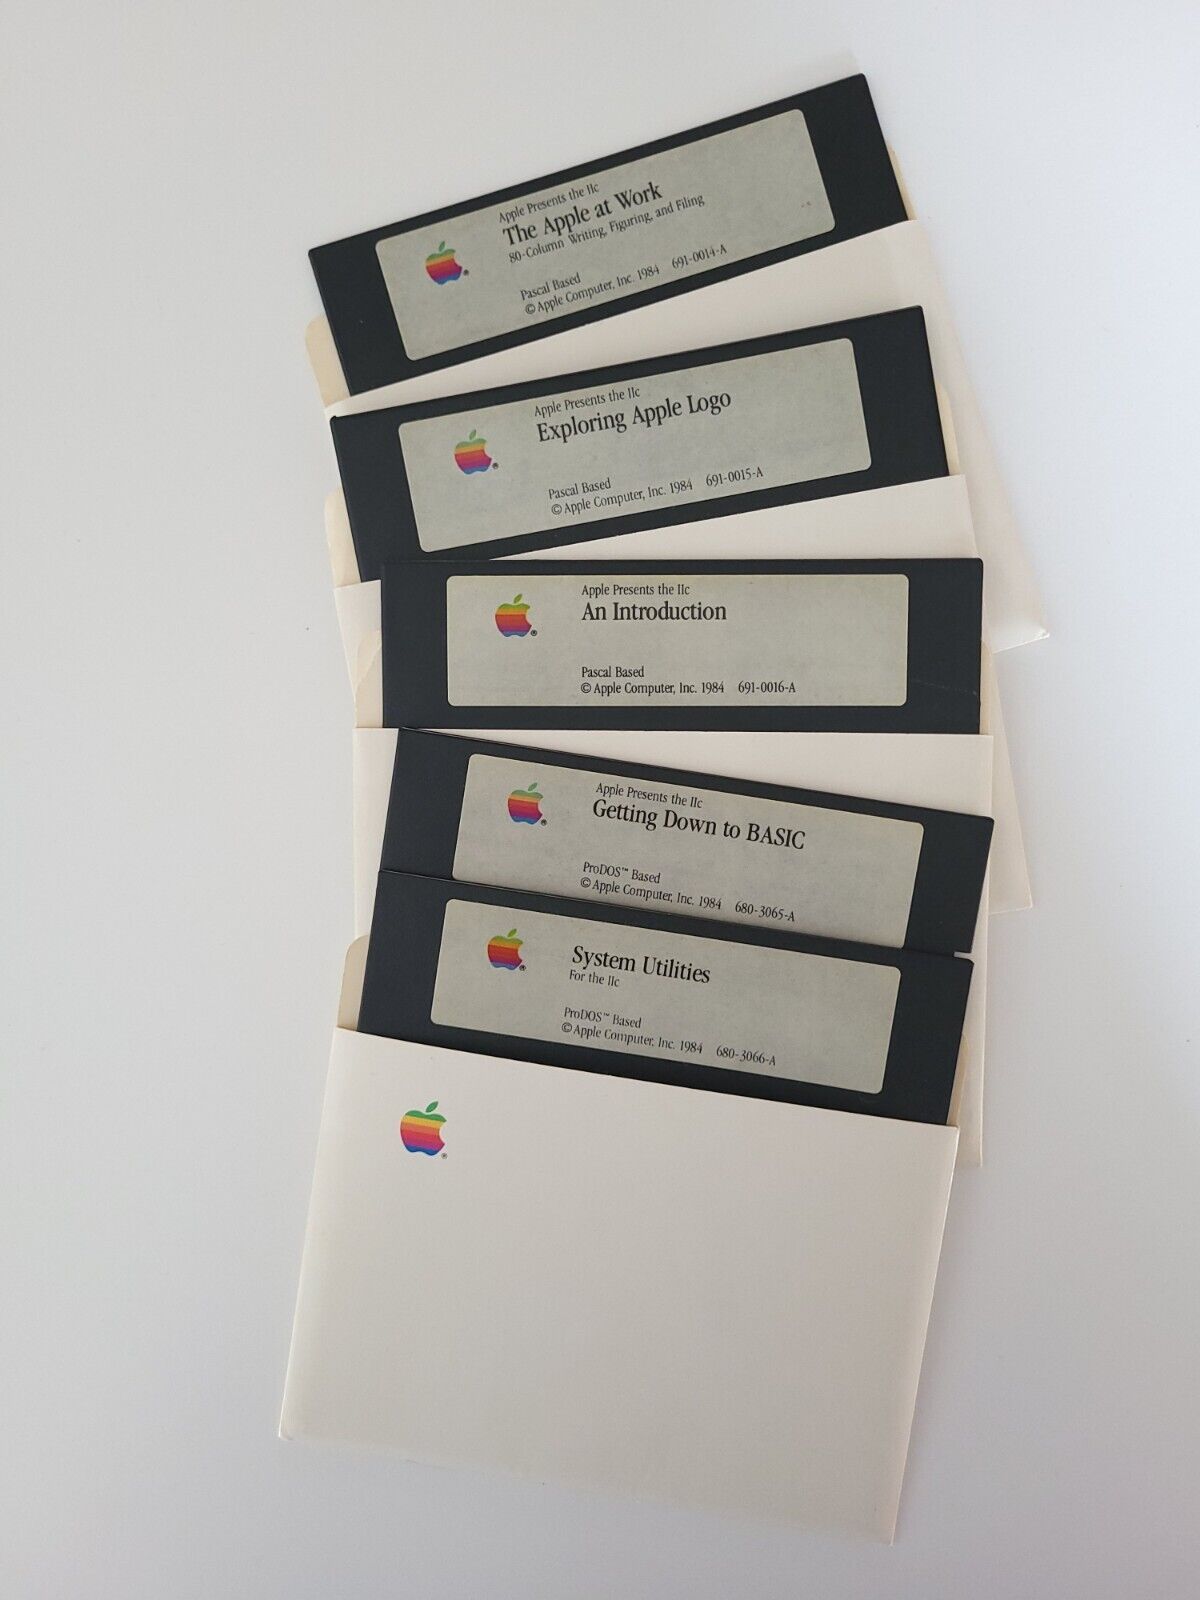 Apple Presents the IIc Lot Series. 1984 Vintage - 5 Disks